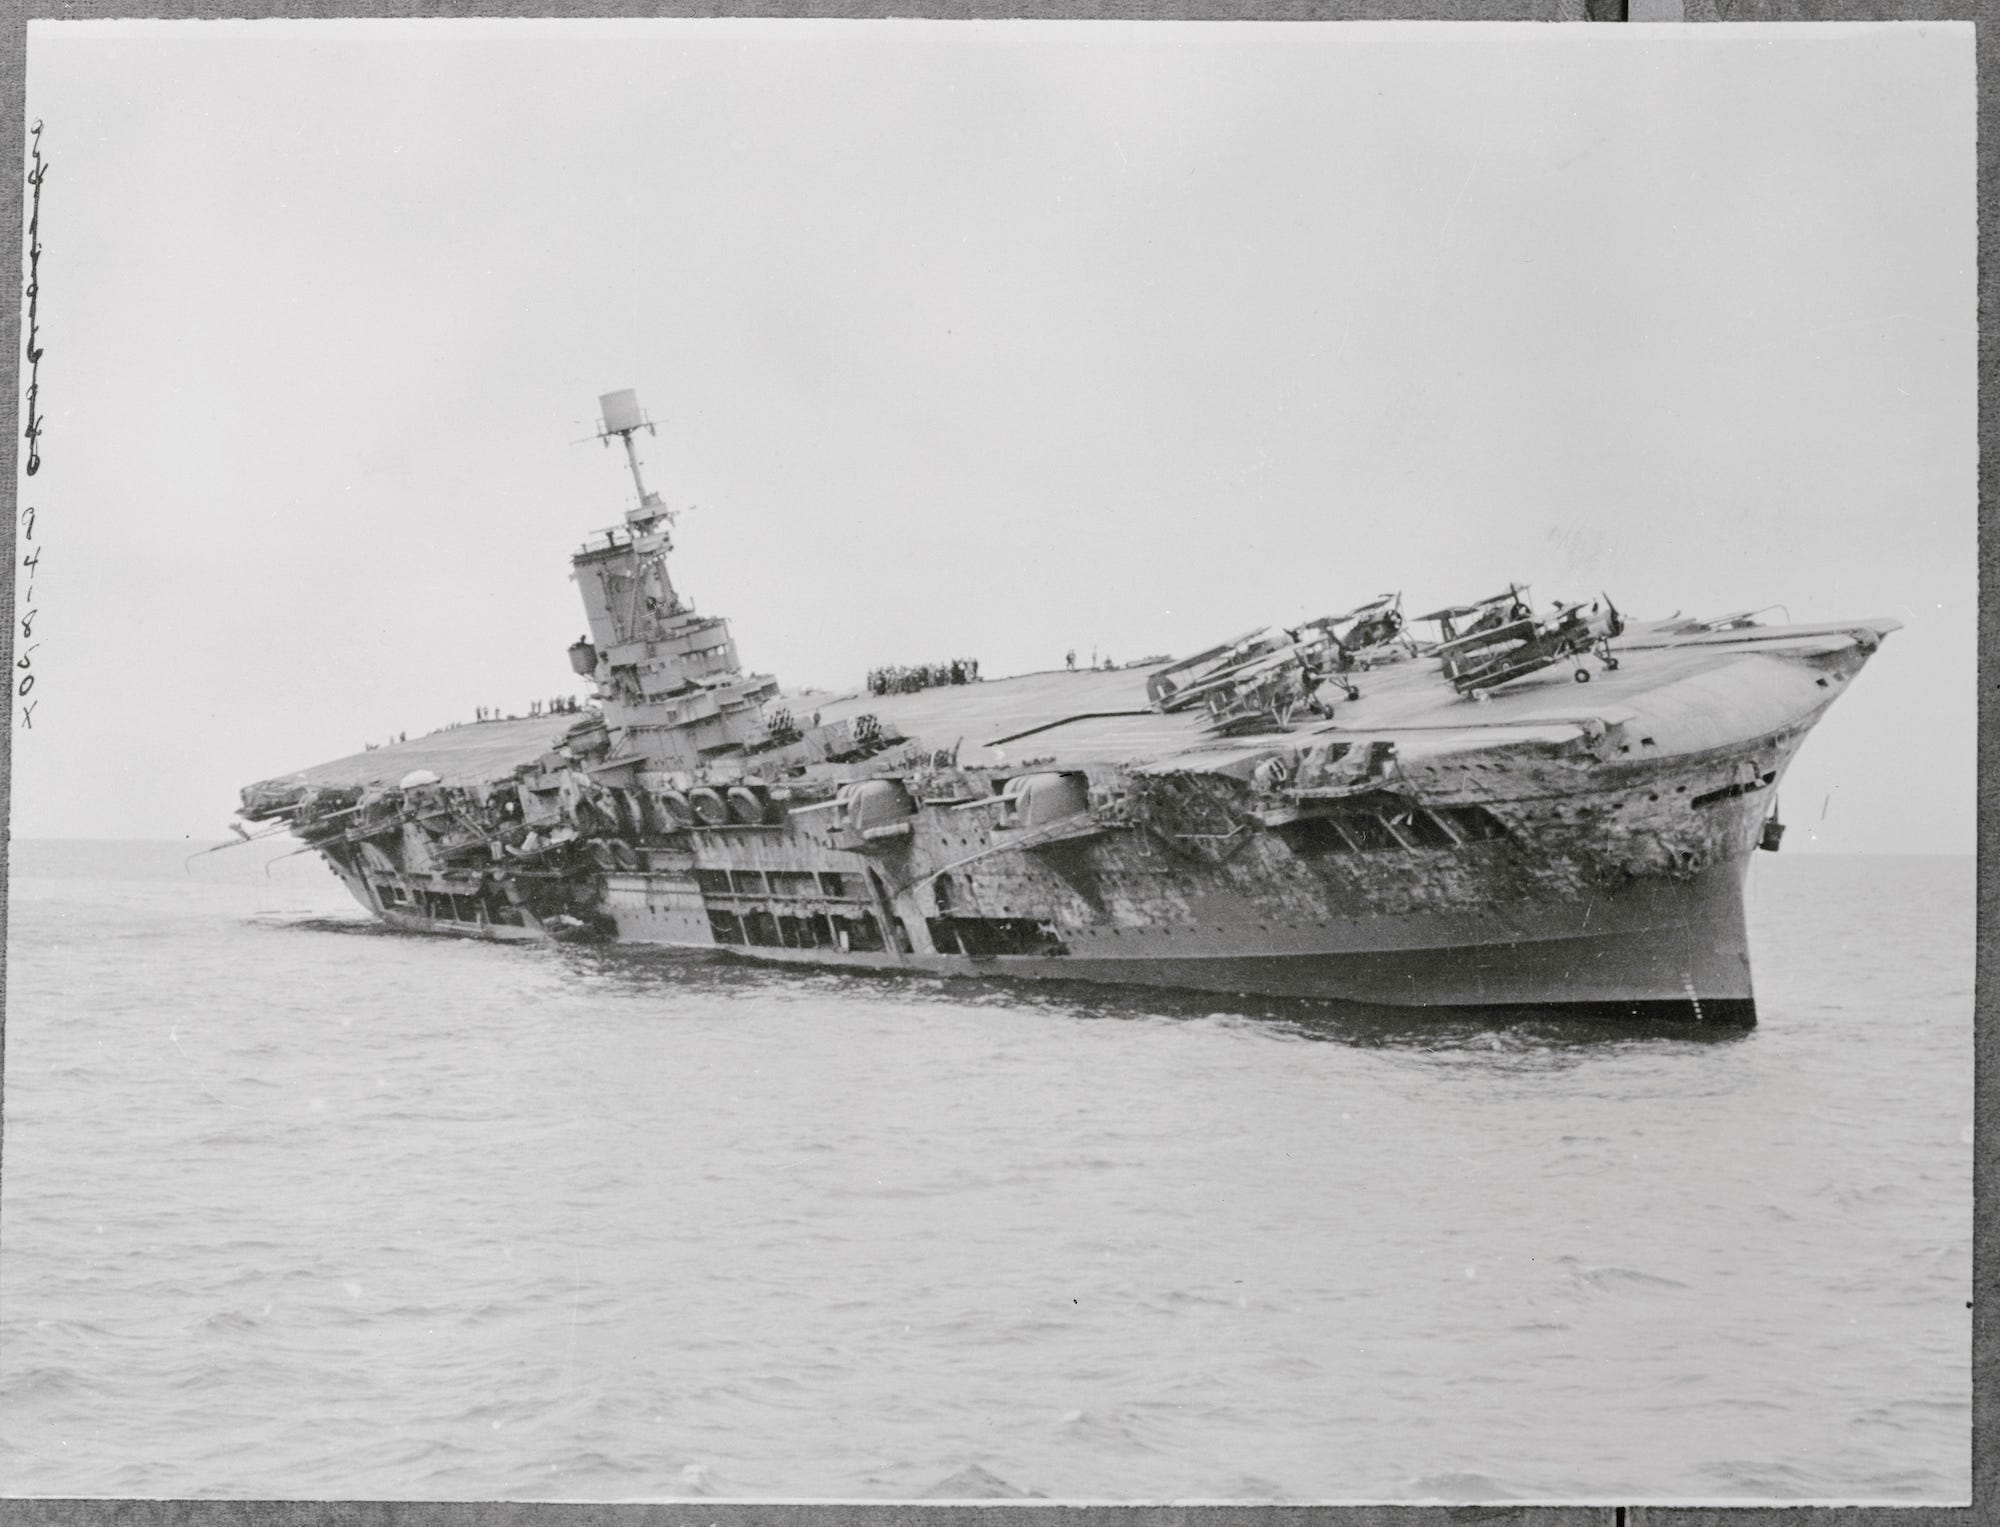 British aircraft carrier HMS Ark Royal sinking